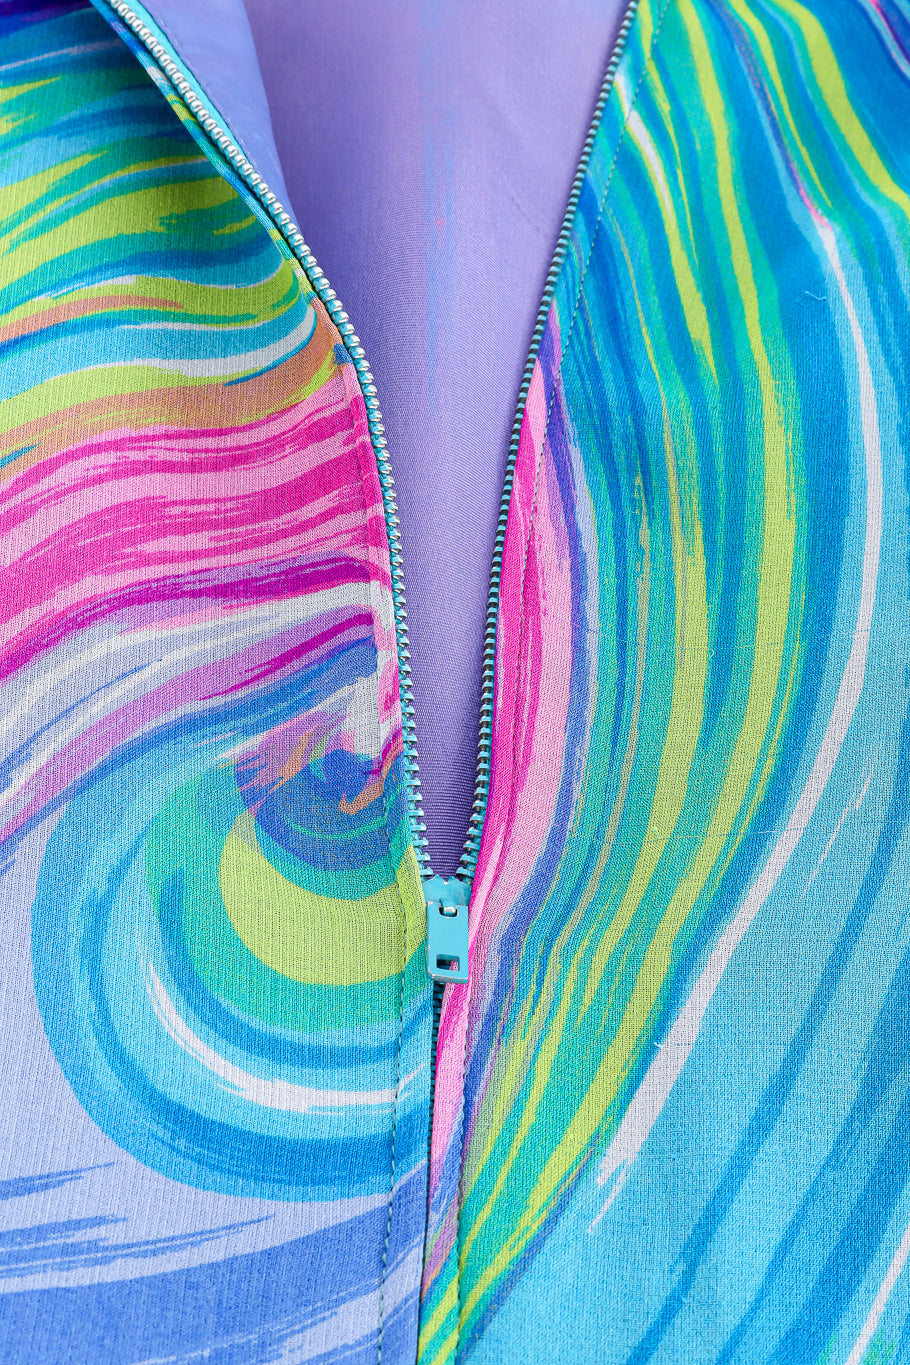 Vintage Mr. Frank Abstract Swirl Silk Dress back zipper closeup @Recessla